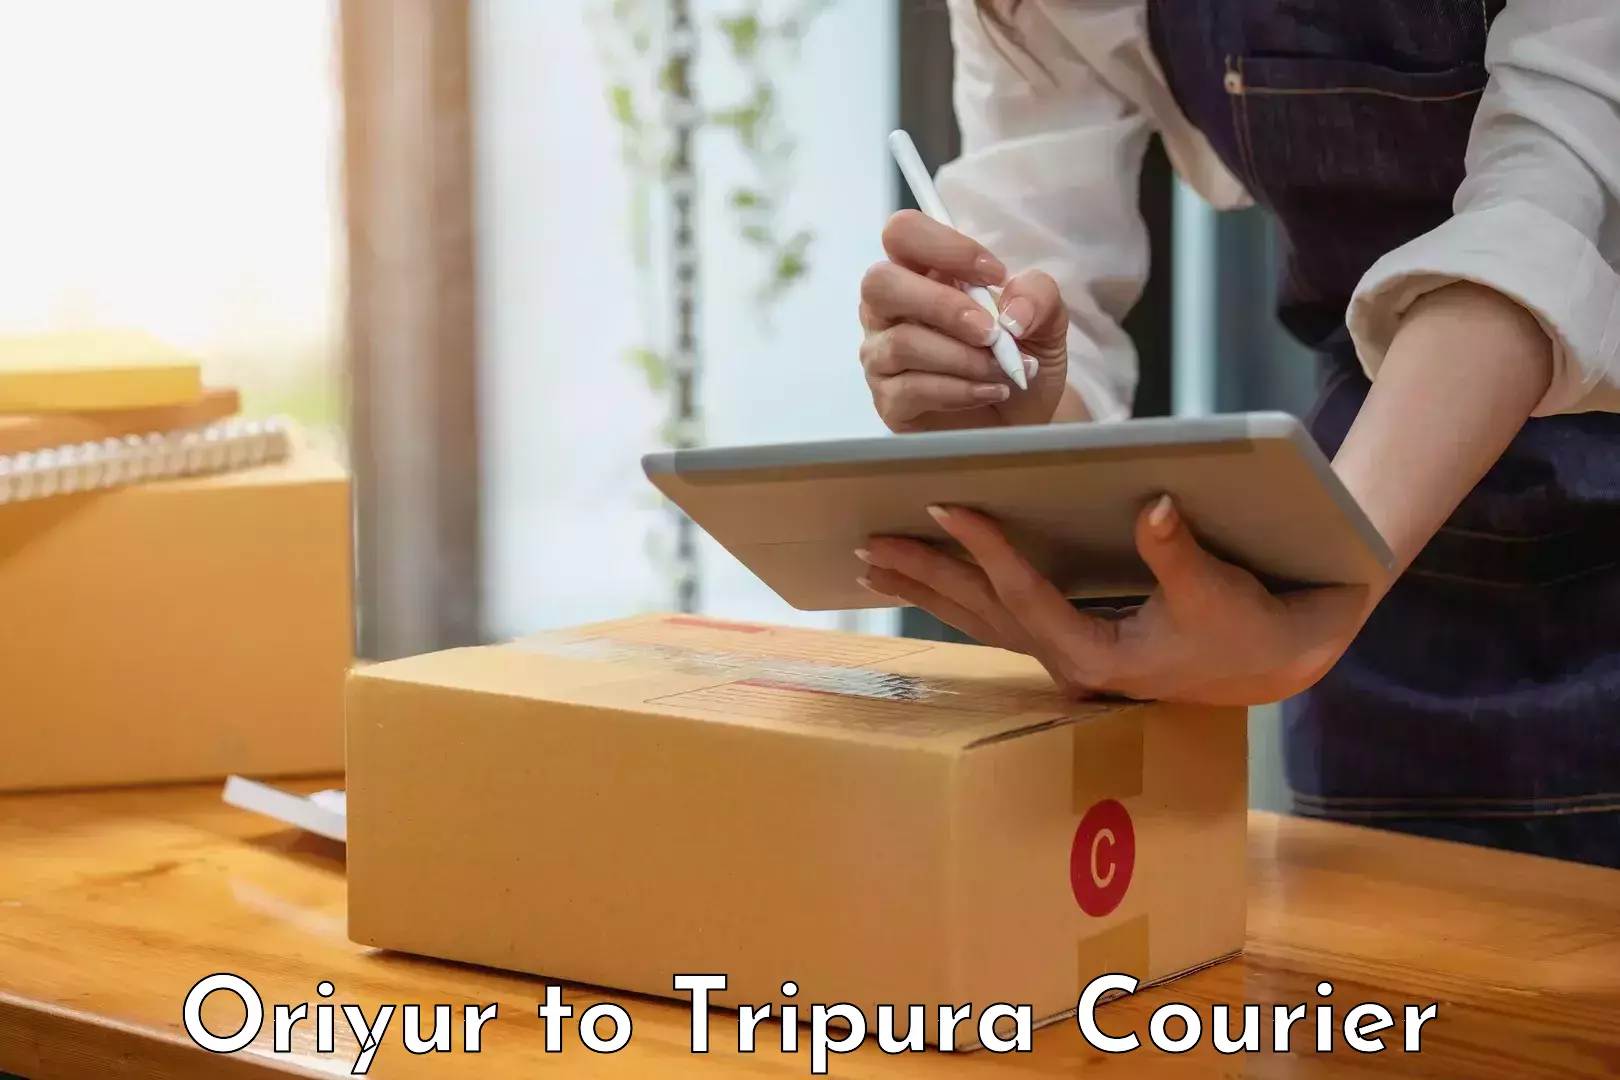 International parcel service Oriyur to Udaipur Tripura